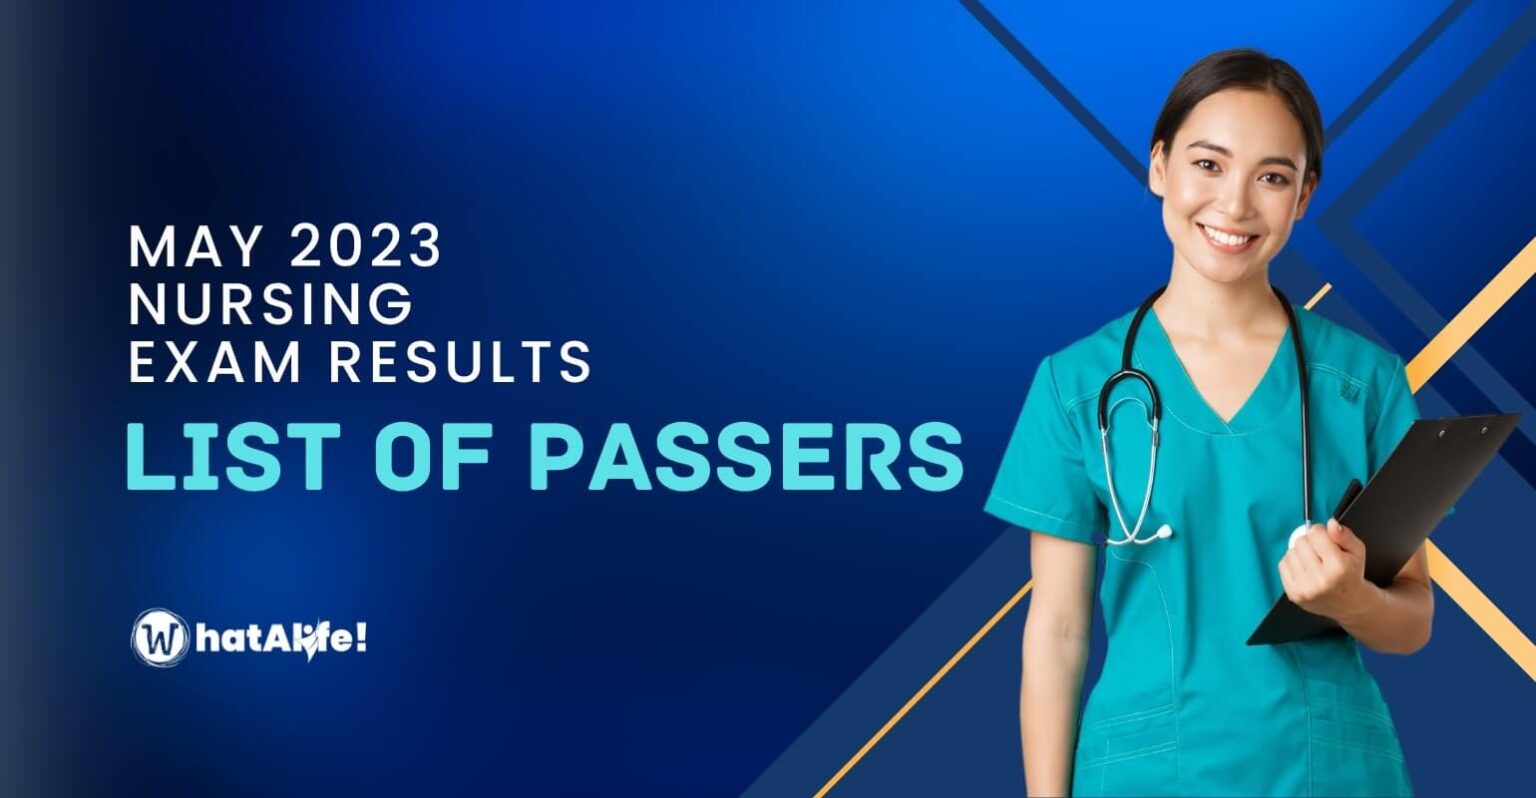 List of Passers — May 2023 Nursing Licensure Exam WhatALife!